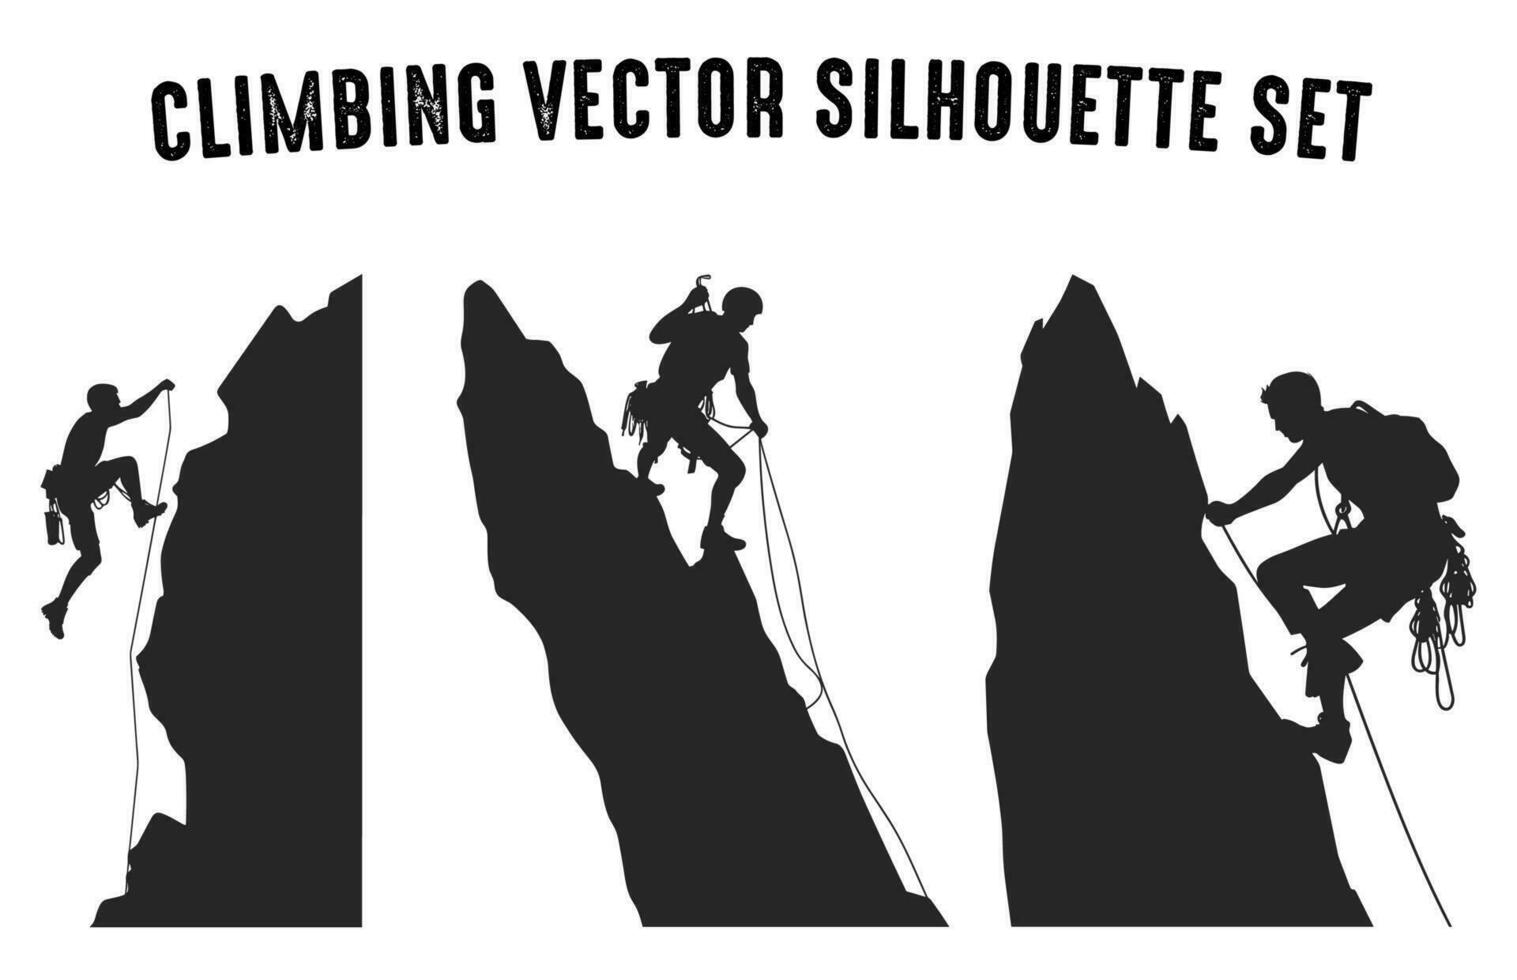 gratis trepador siluetas vector manojo, montaña alpinismo siluetas en diferente posa, rock trepador negro silueta conjunto